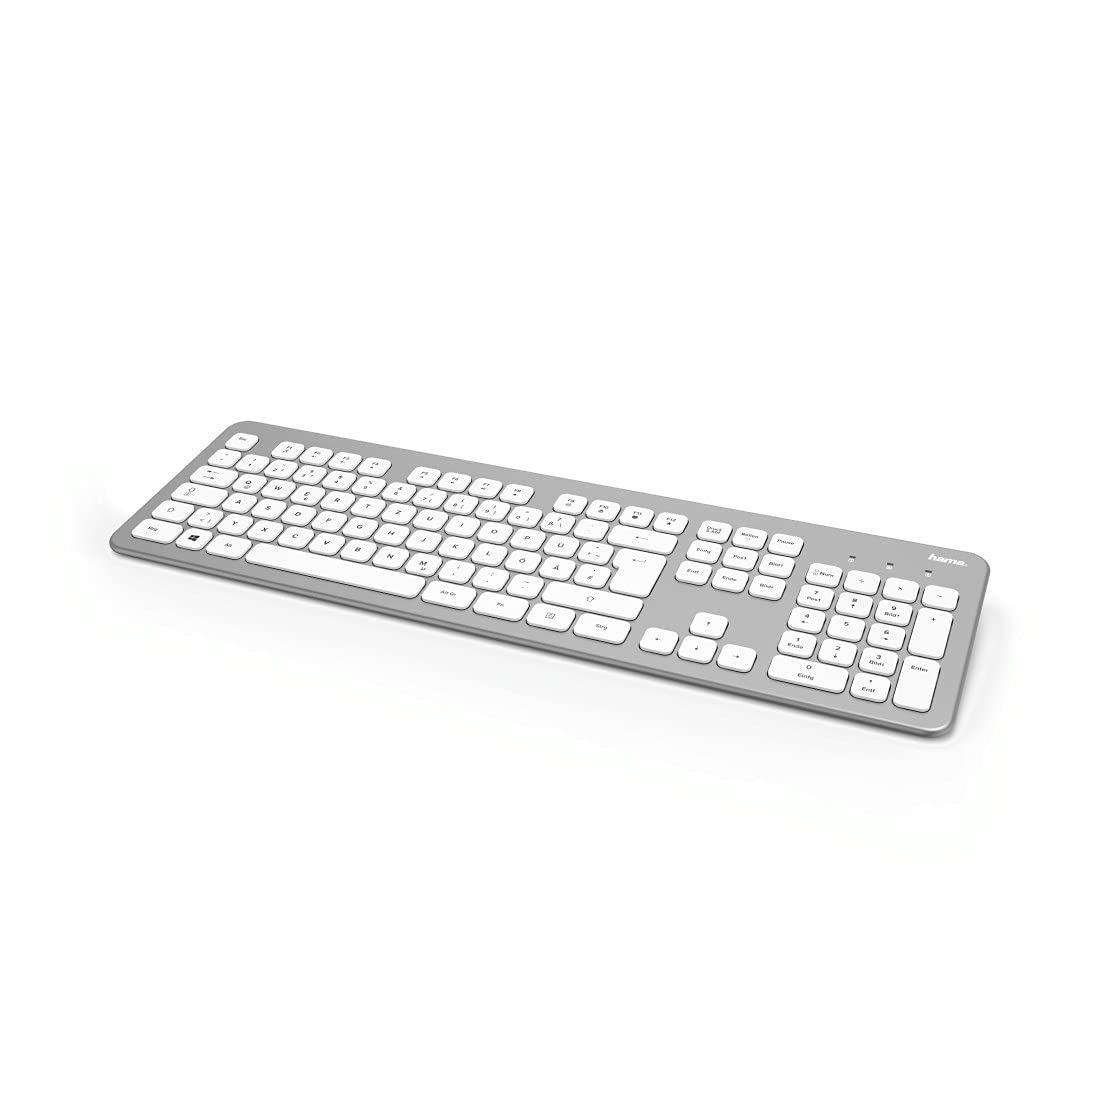 Hama Kmw-700 Wireless Keyboard, Mouse Set, D3182676 - White